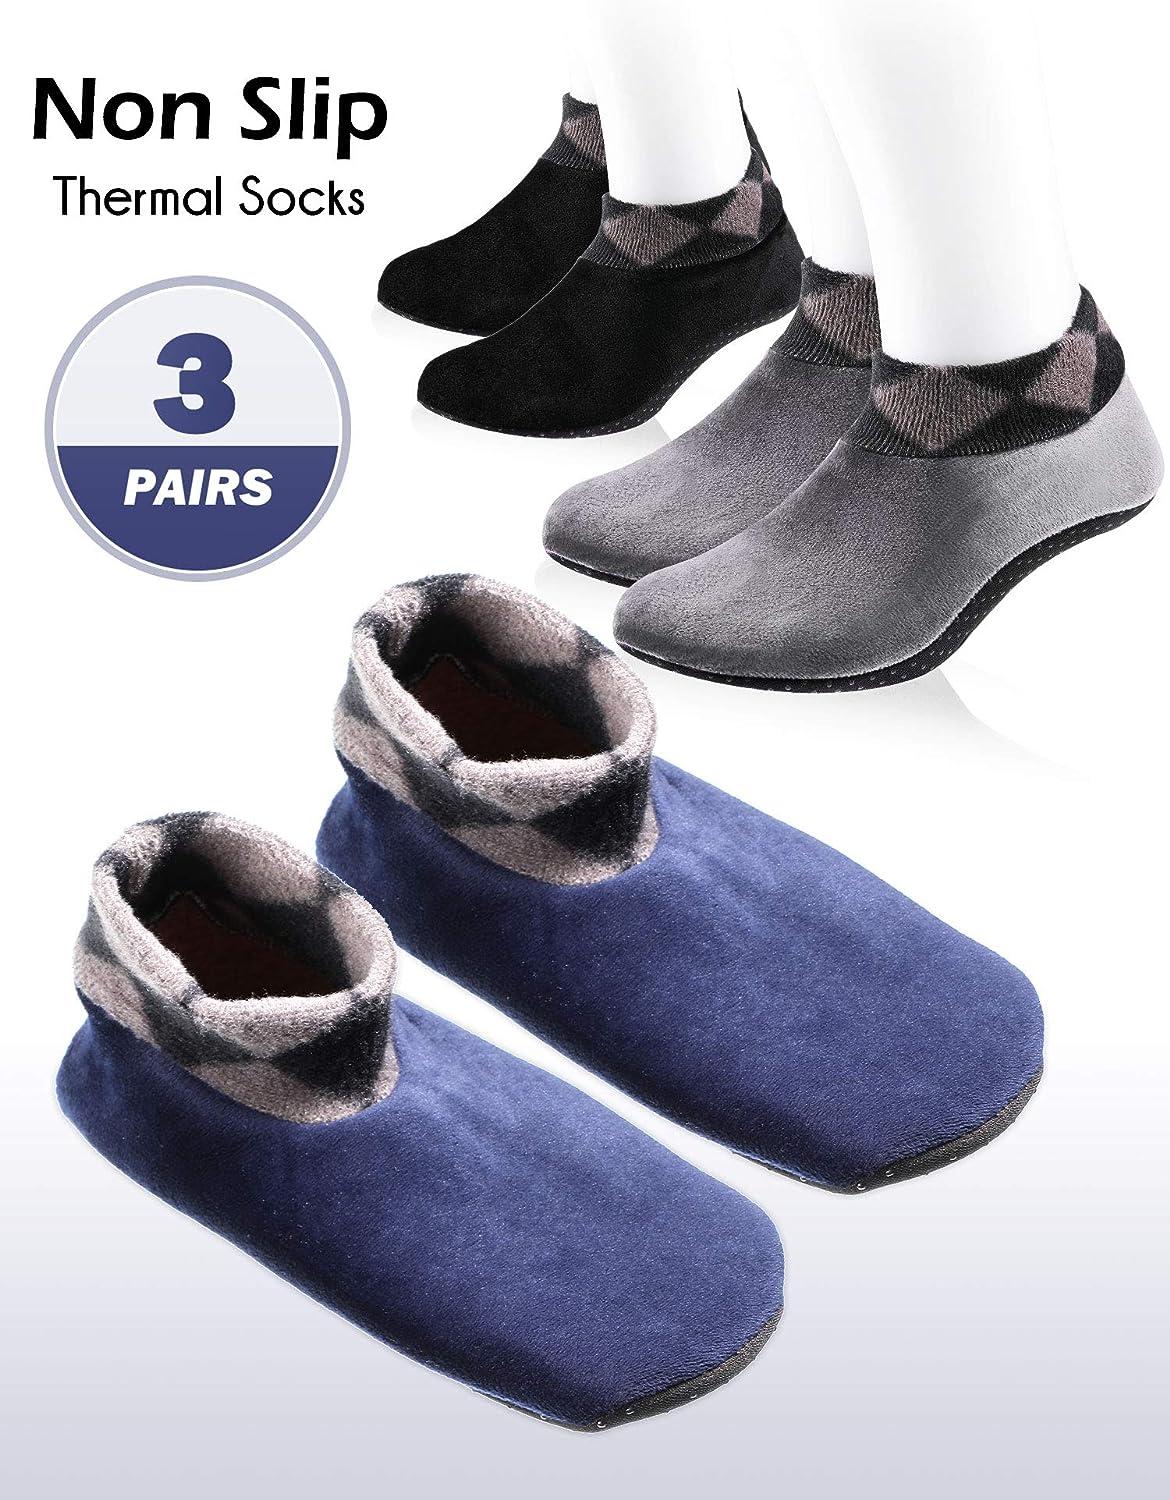 Buy Fluffy Slipper Socks for Men and Women, 3 Pairs Thermal Fuzzy